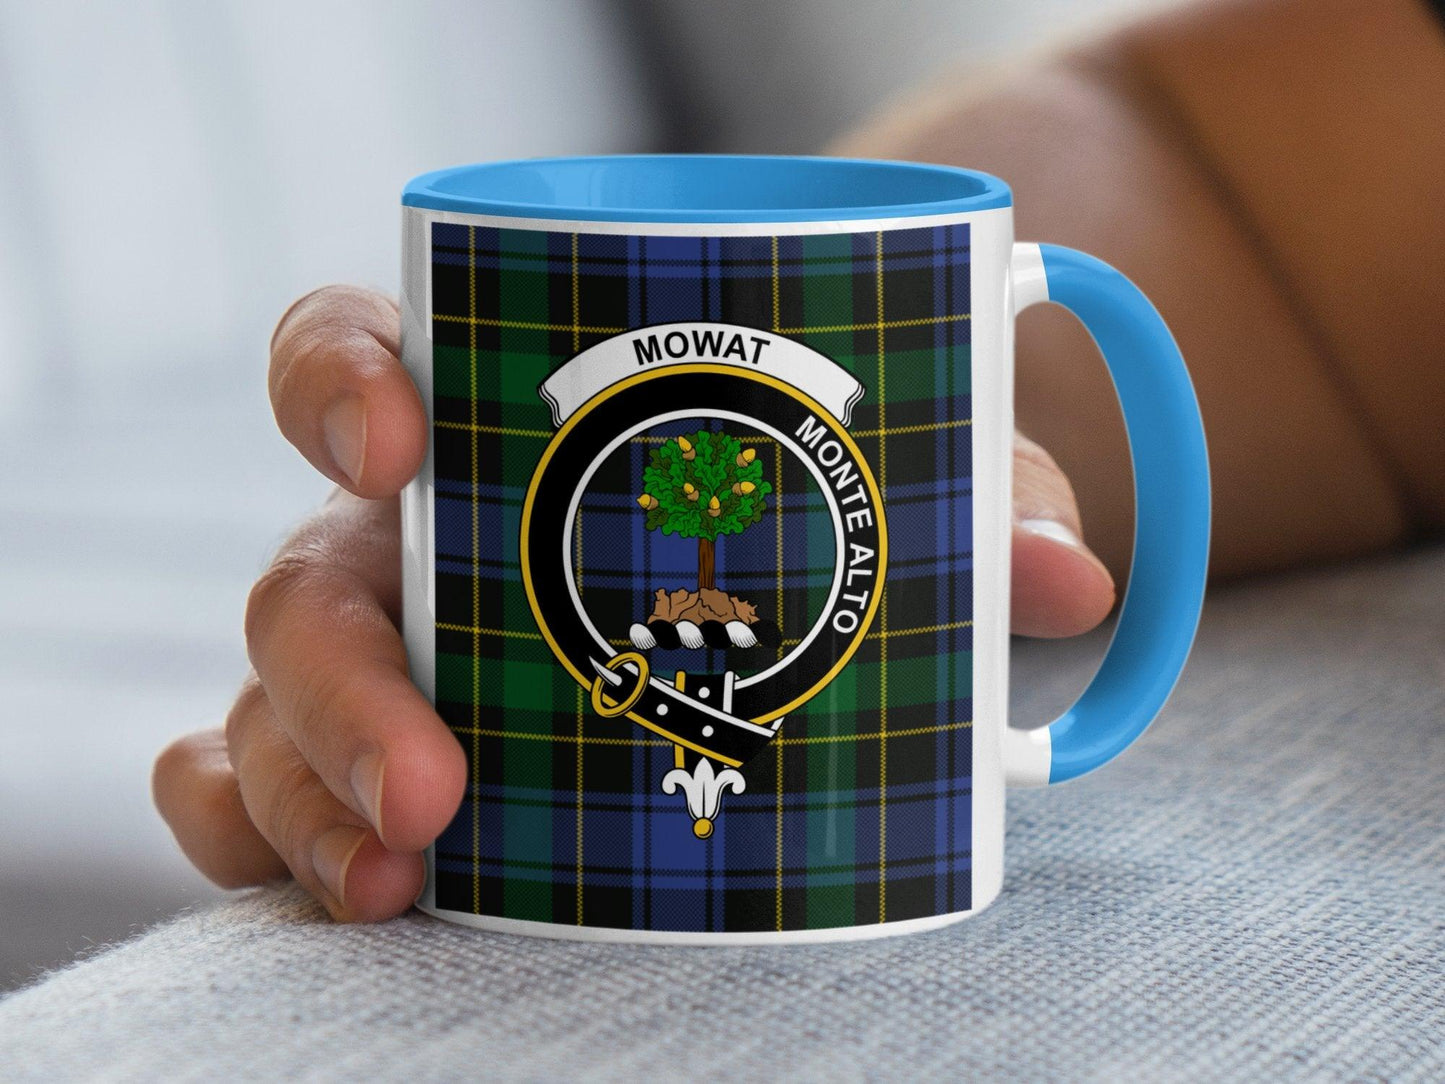 Mowat Scottish Clan Crest and Tartan Design Mug - Living Stone Gifts